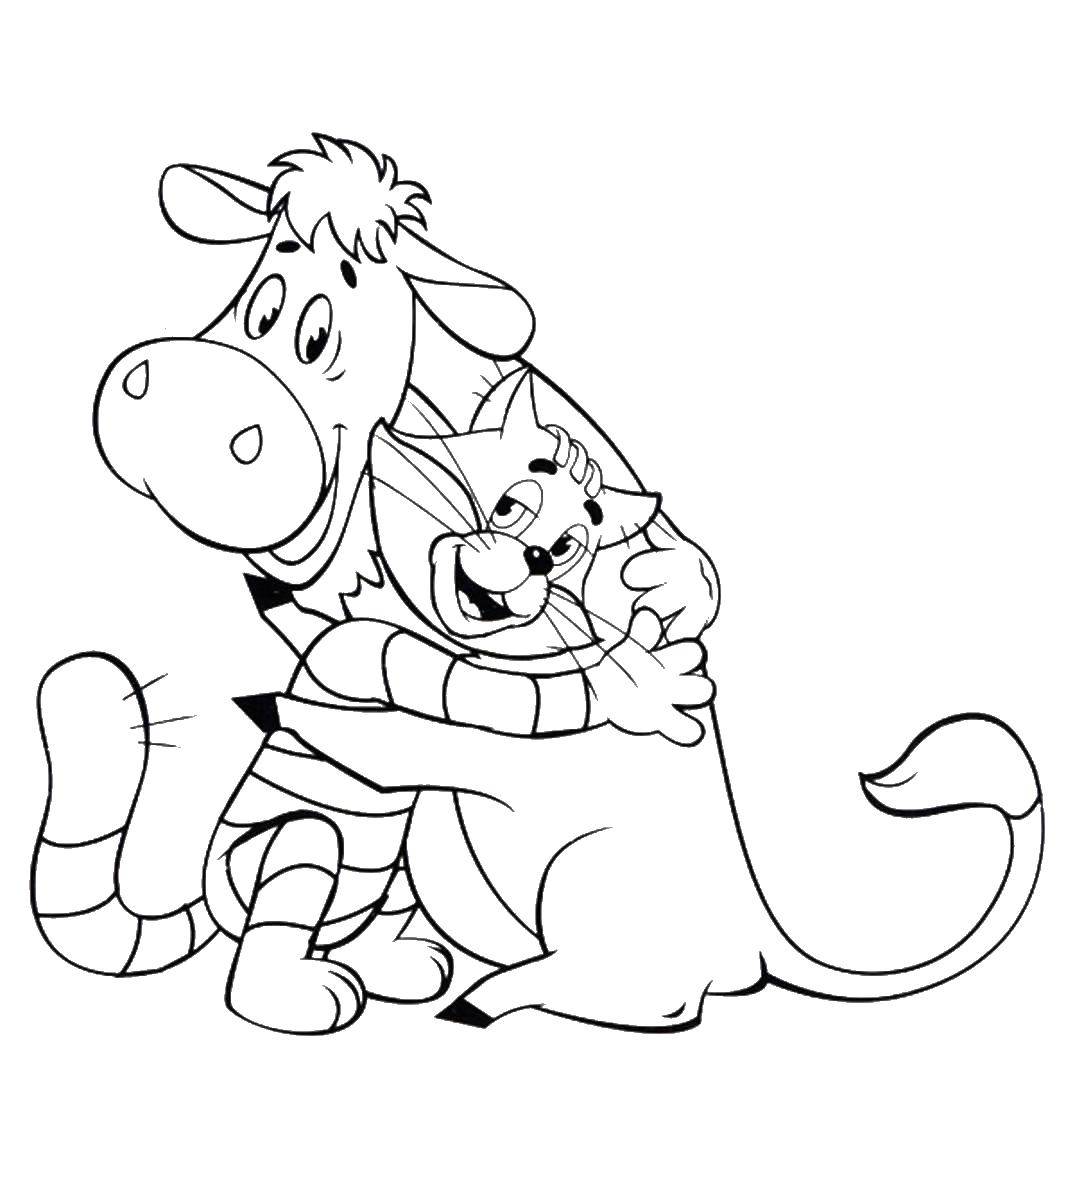 Coloring Sylvester hugs the calf gavryusha. Category coloring, buttermilk. Tags:  the cat Matroskin, calf gavryusha.